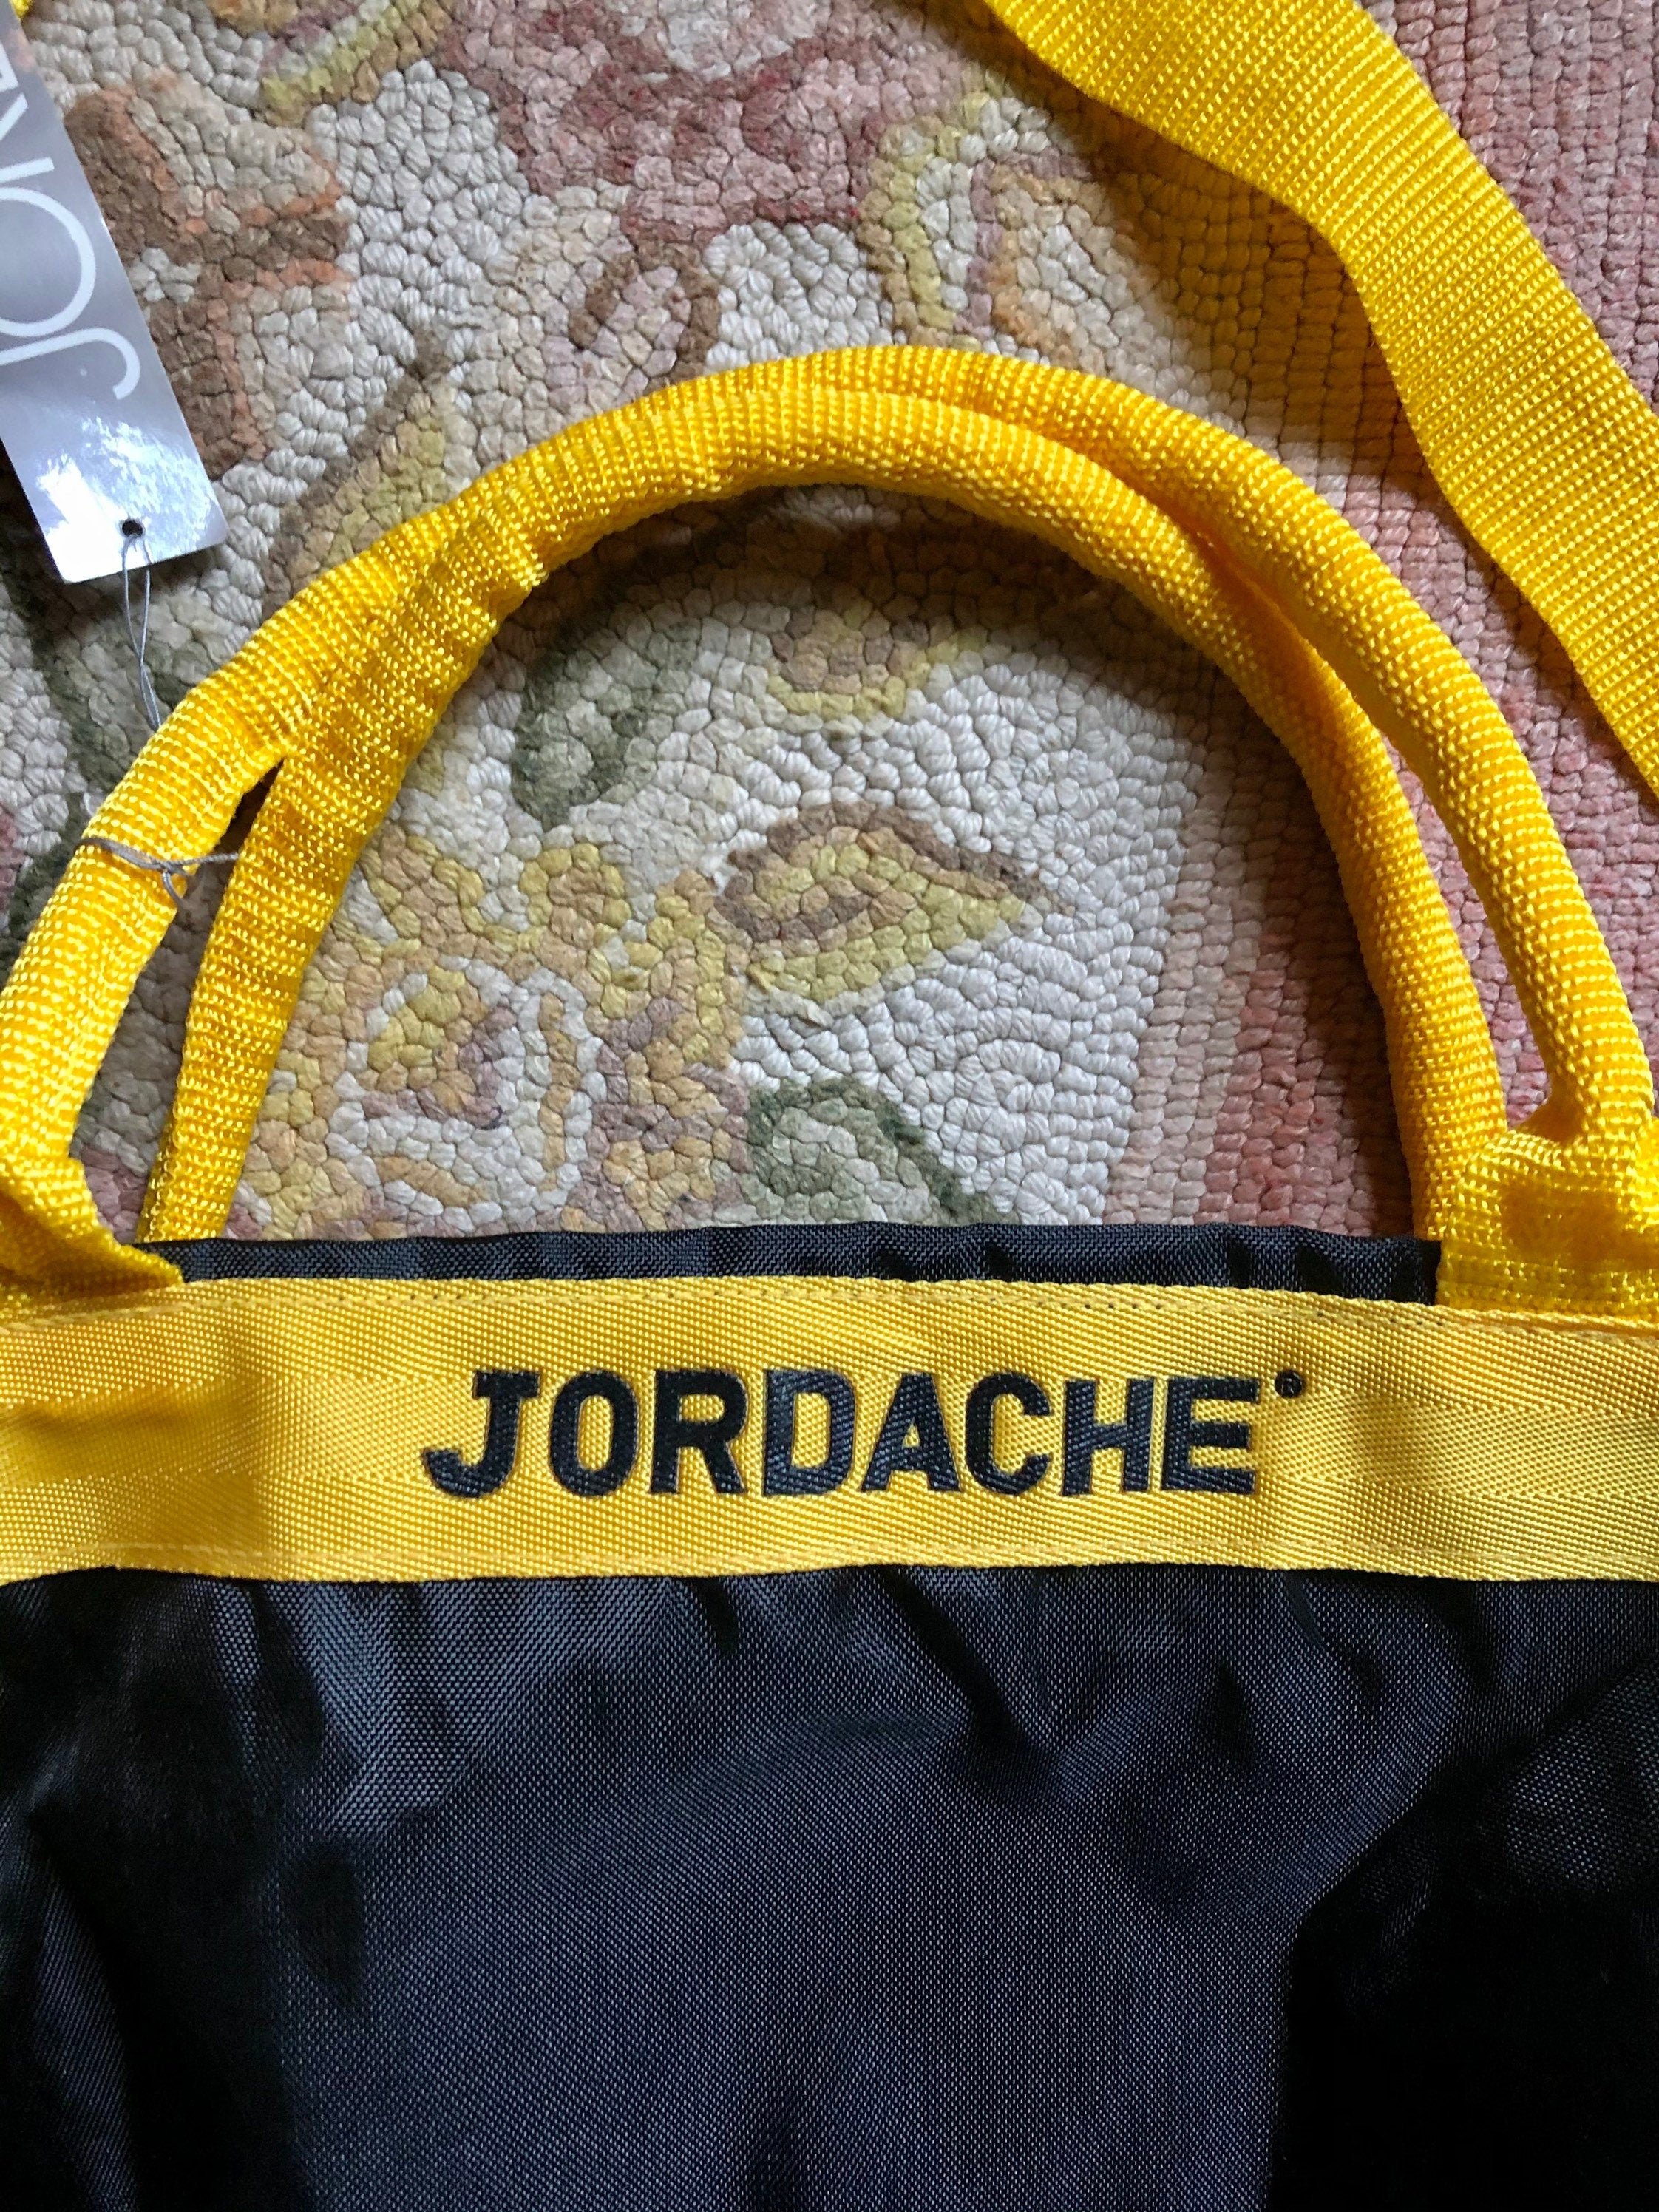 Jordache, Bags